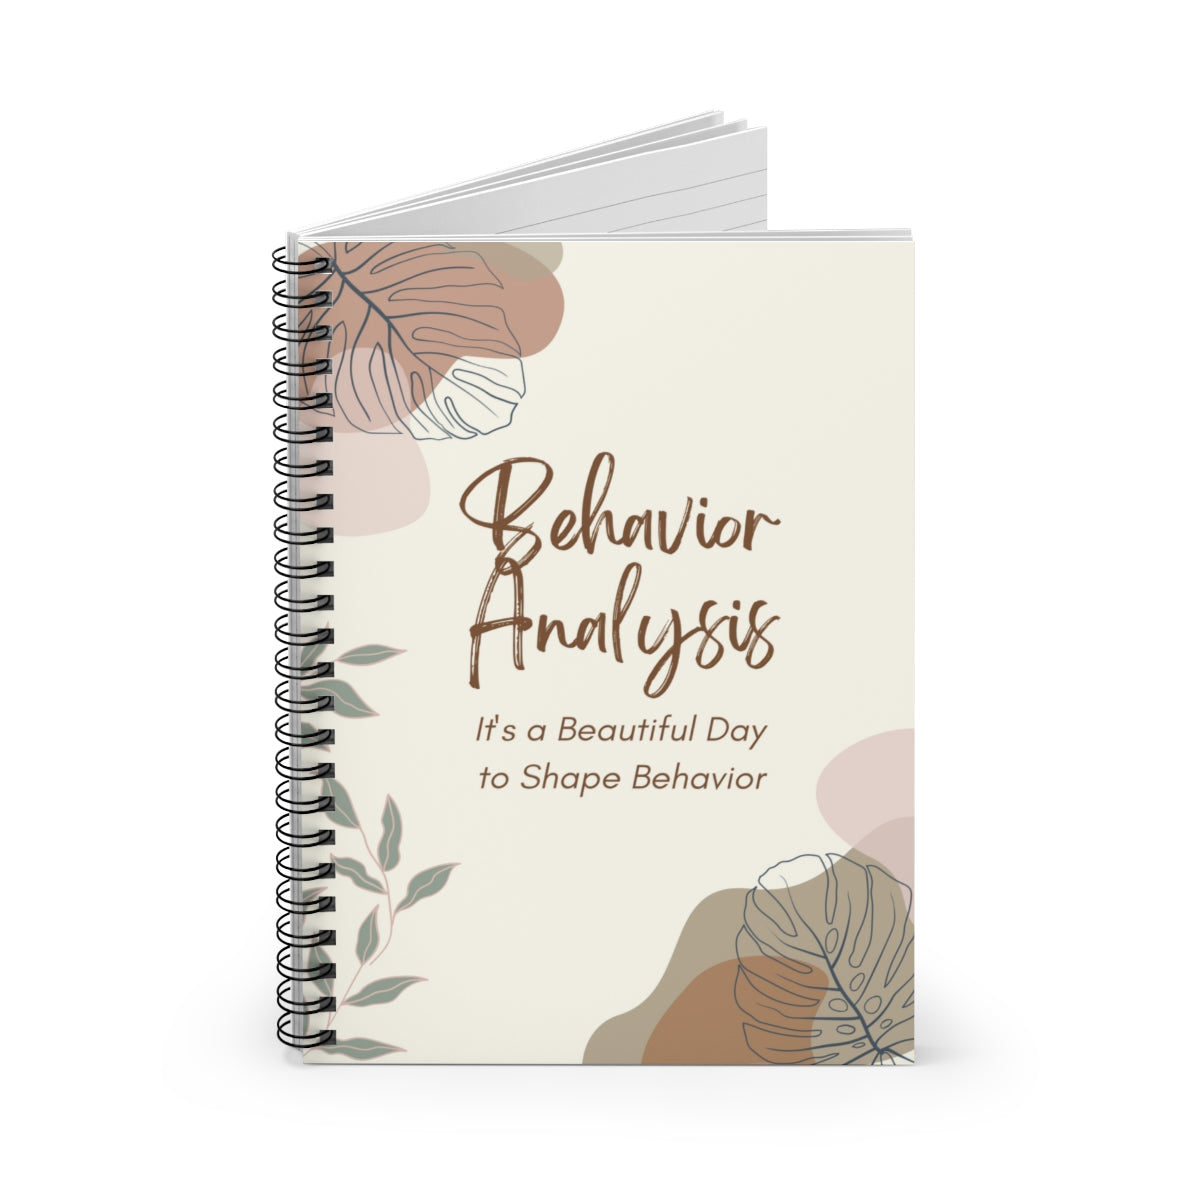 Behavior Analysis Spiral Notebook - Ruled Line